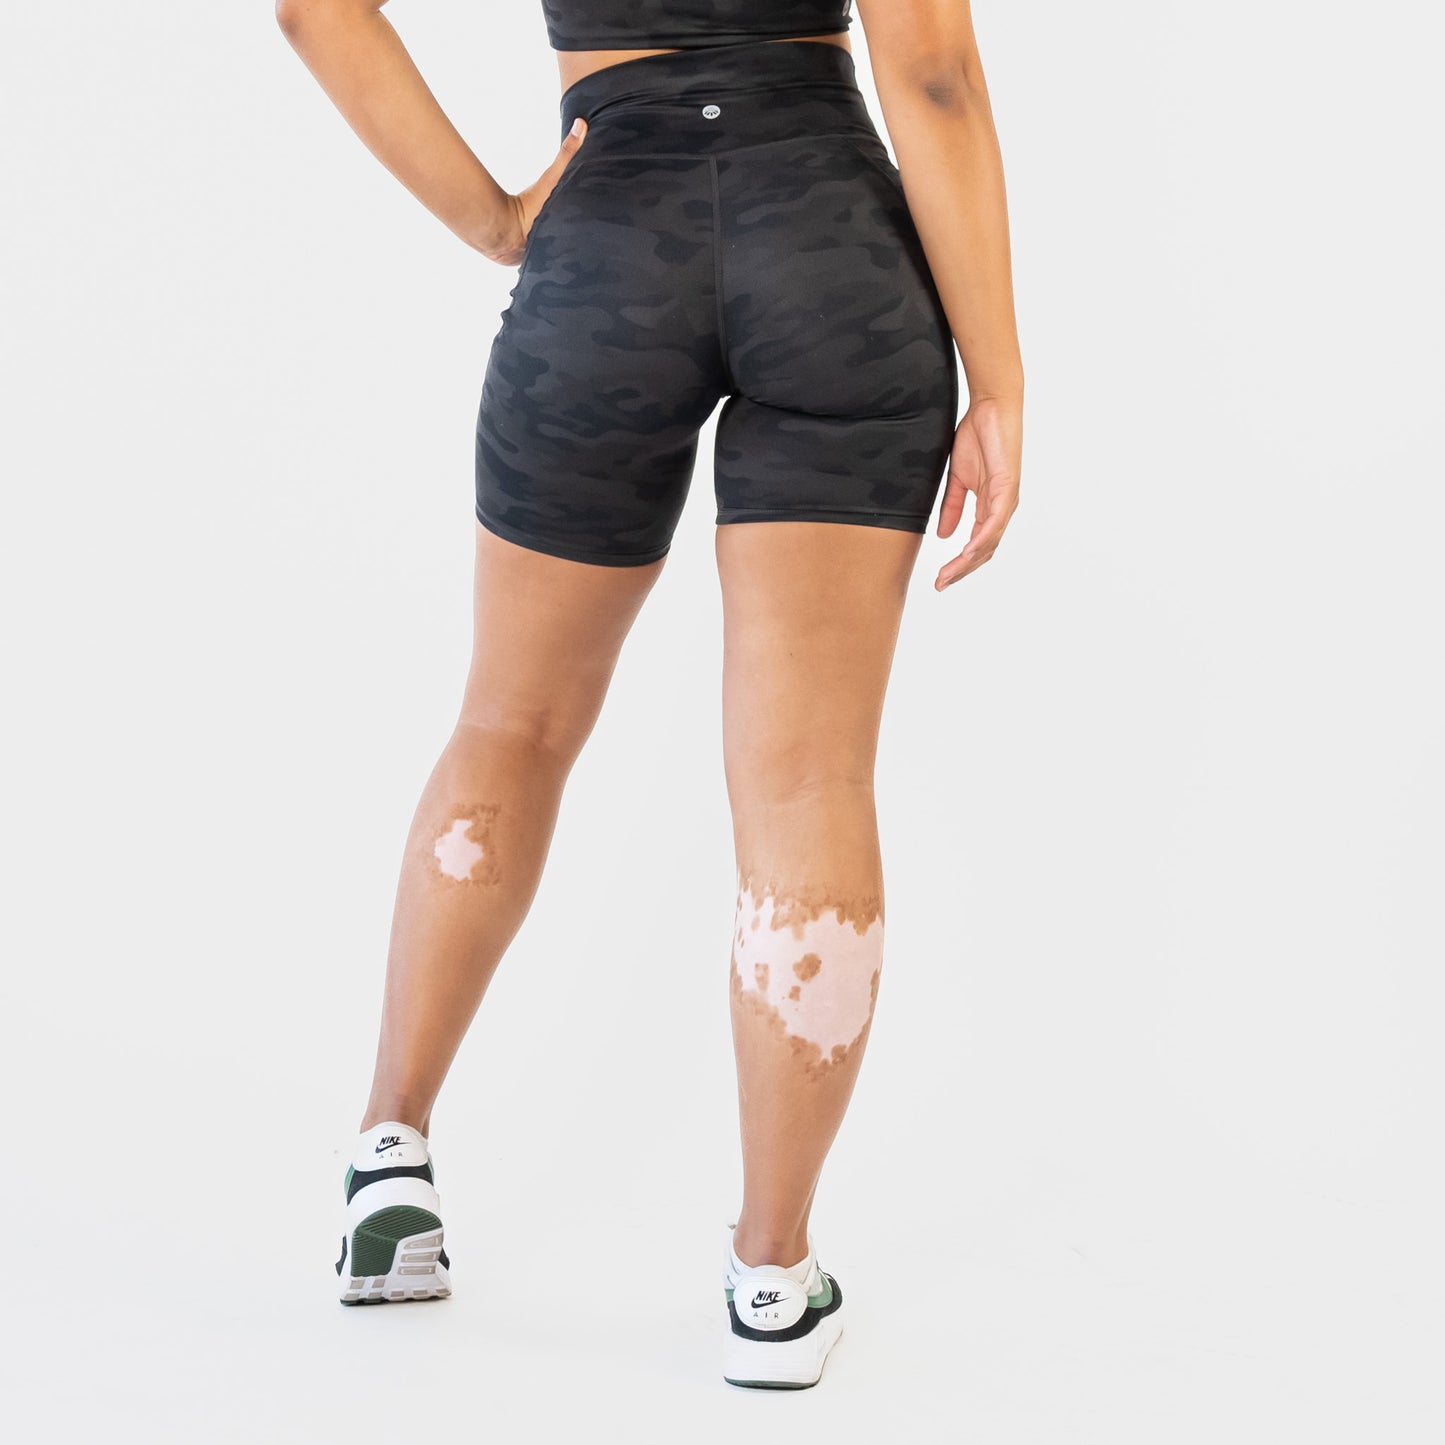 Skin Biker Shorts (8 in. inseam) - Black Camo